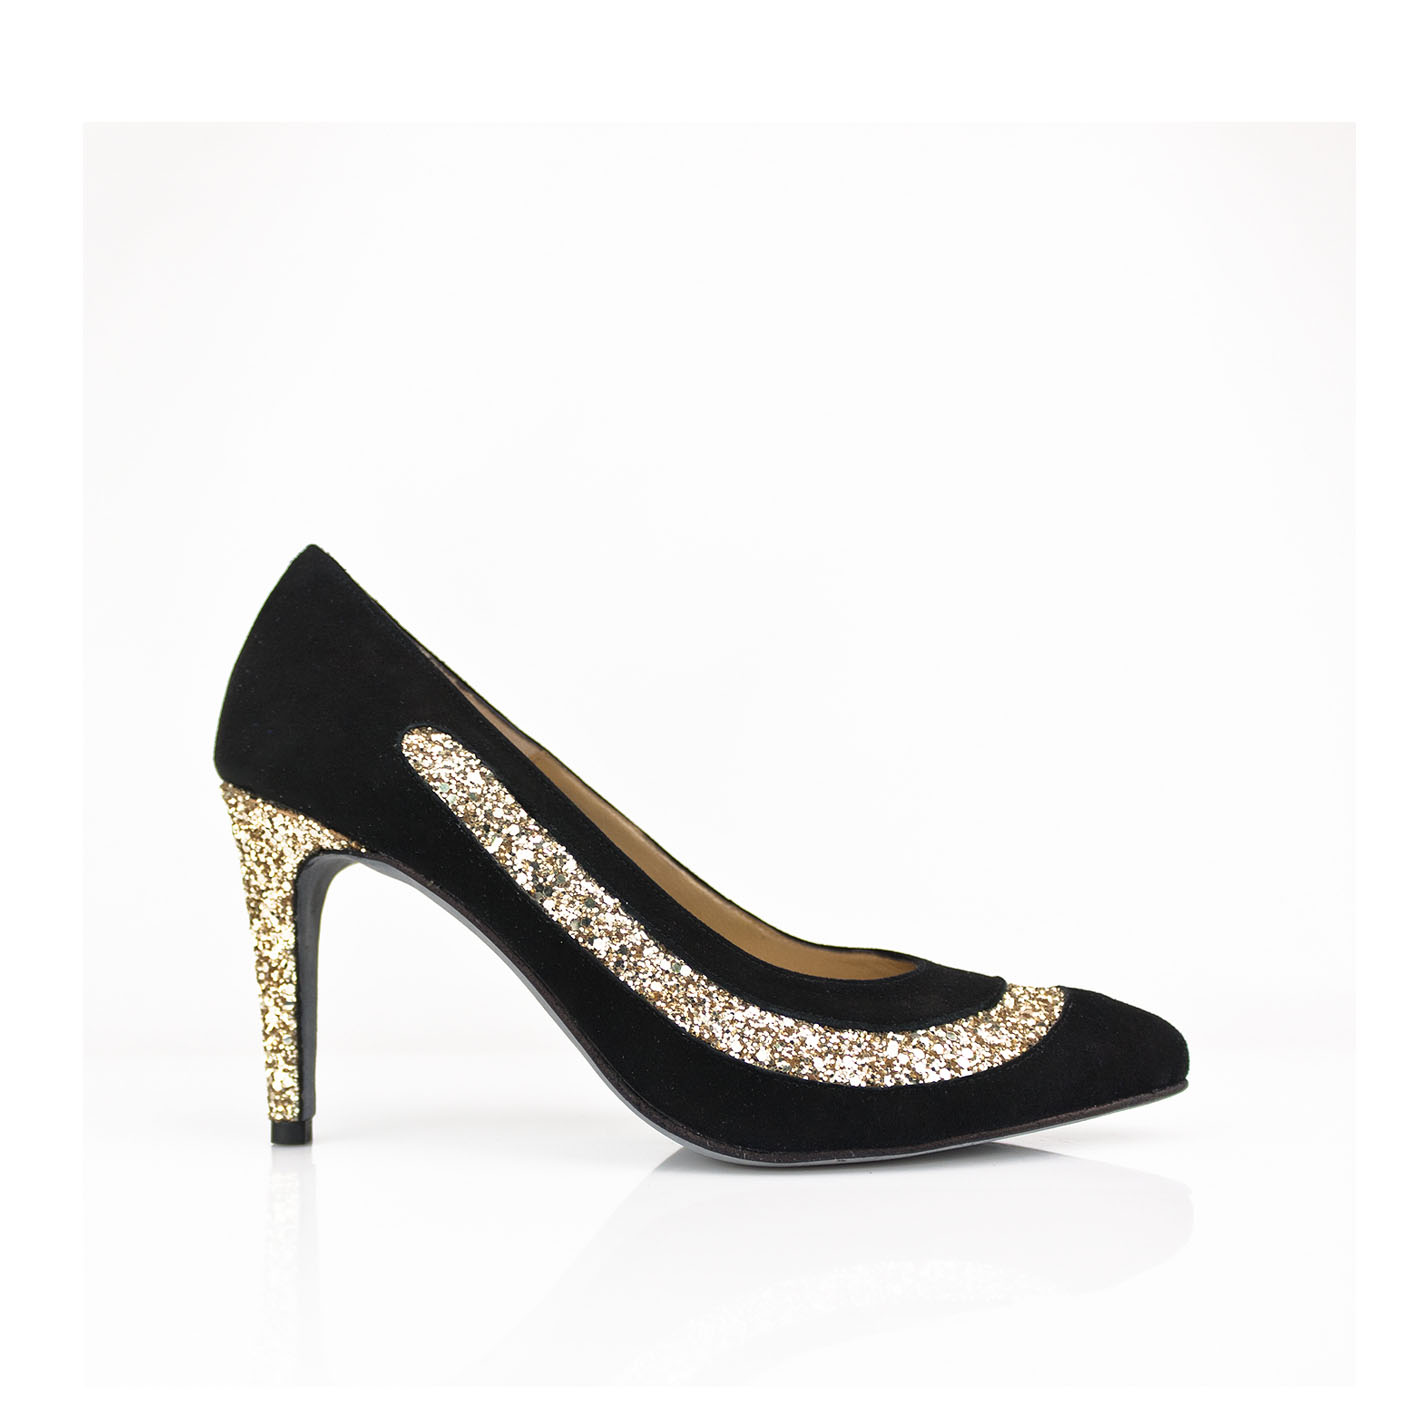 Zapatos de mujer stilettos de fiesta en ante negro glitter oro